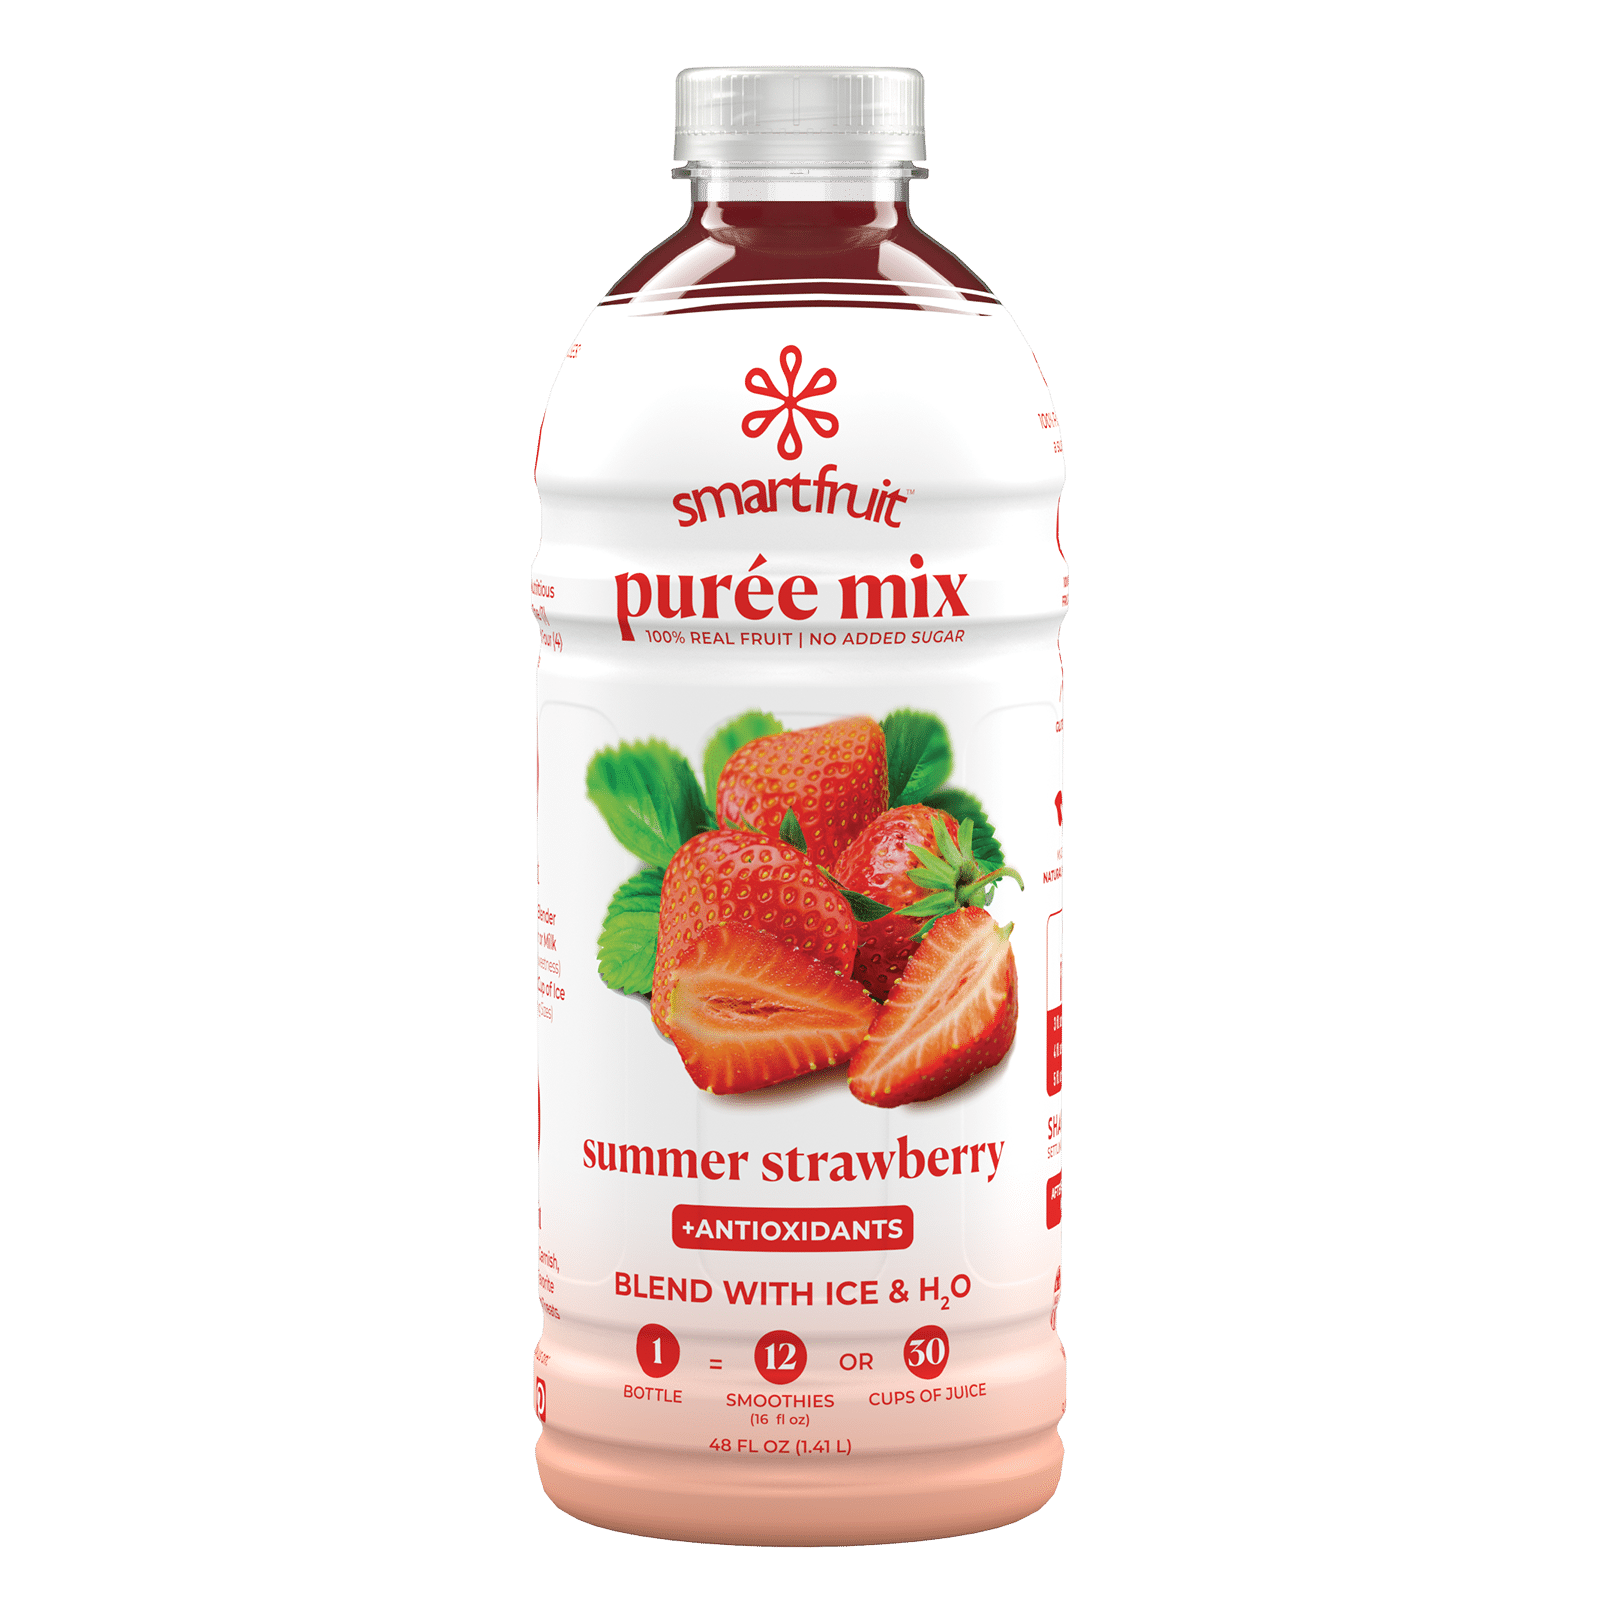 Smartfruit Summer Strawberry Puree Mix bottle